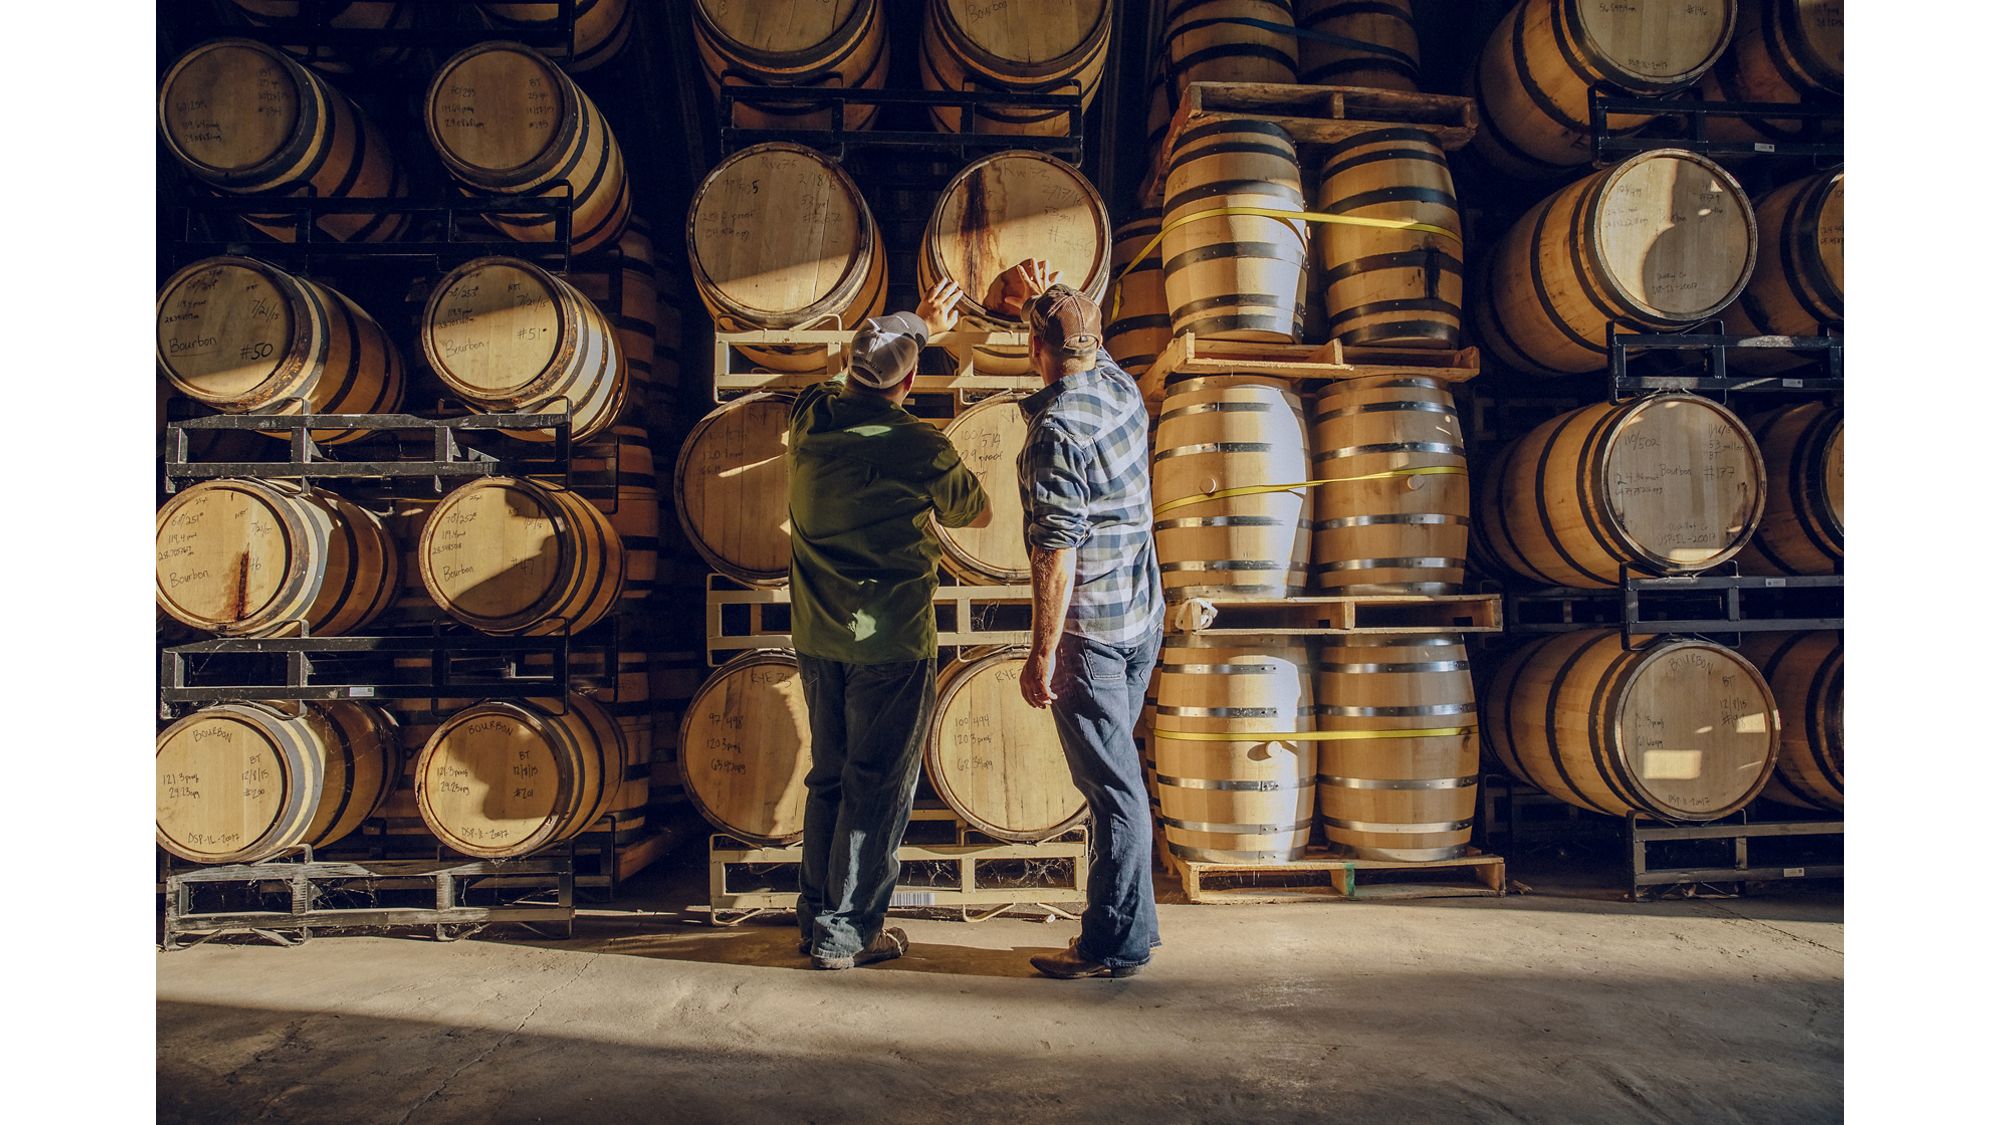 Two men looking through beverage barrel inventory